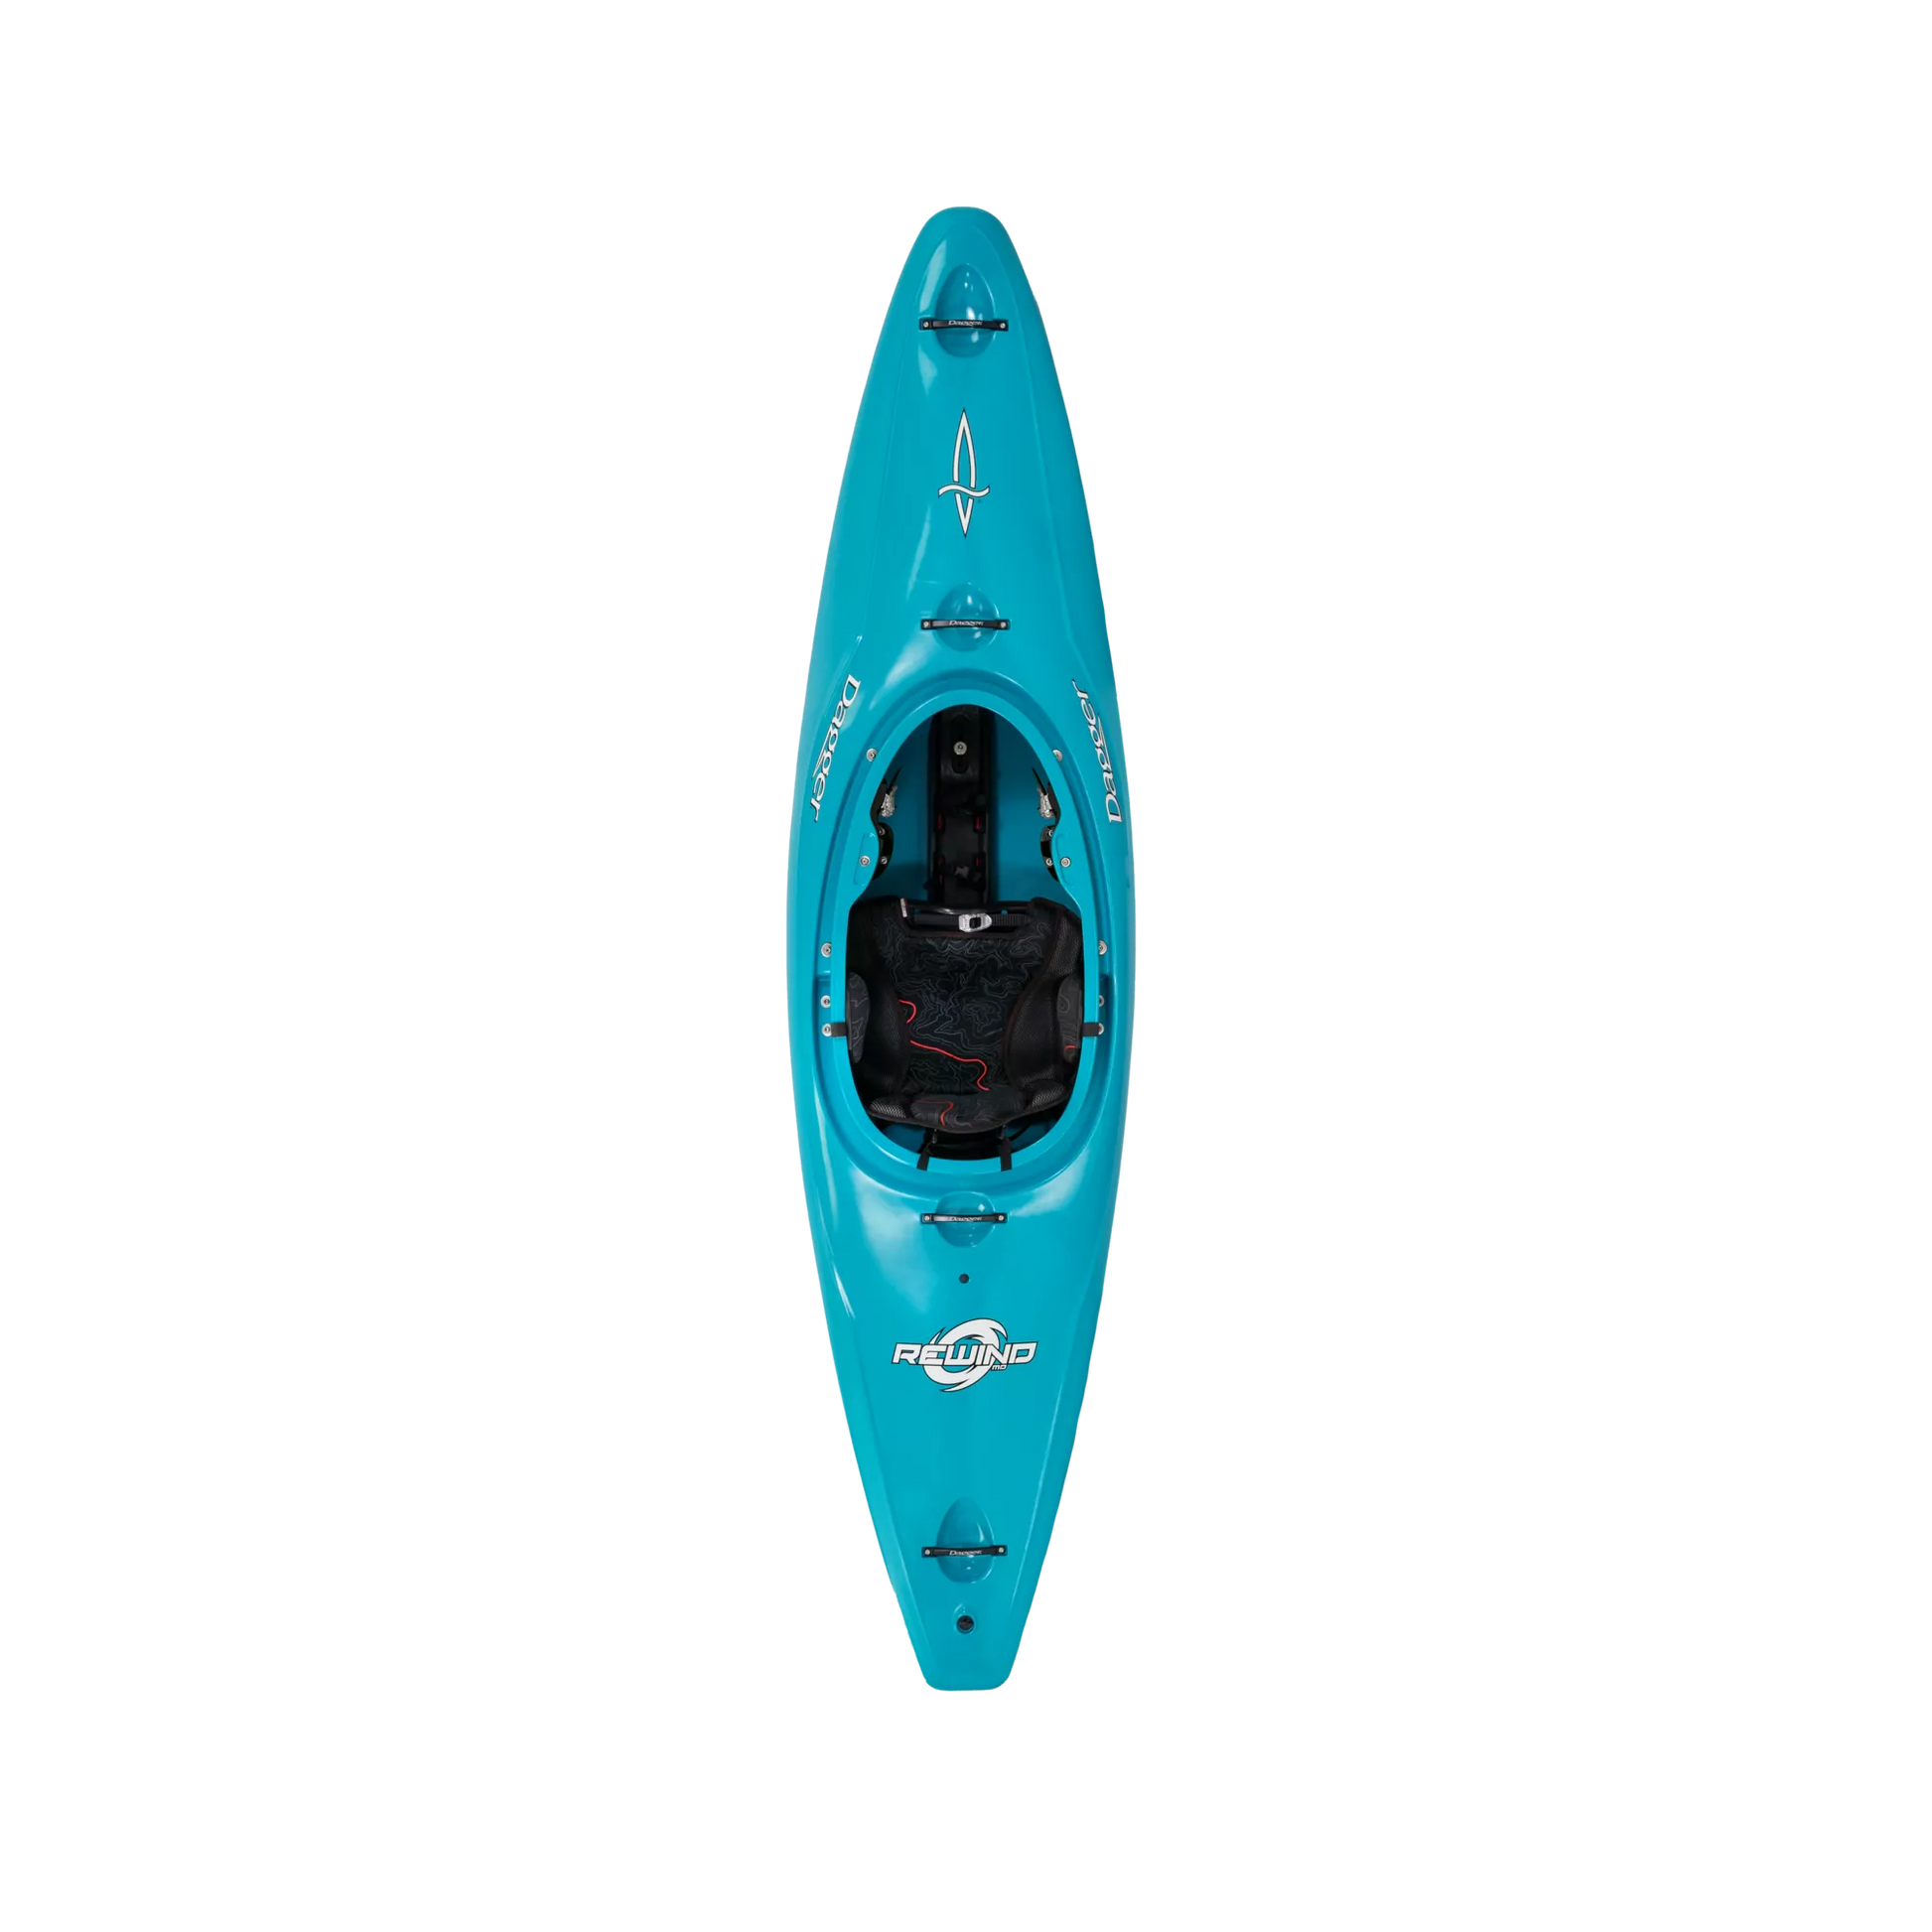 A blue Dagger Rewind whitewater kayak on a black background.